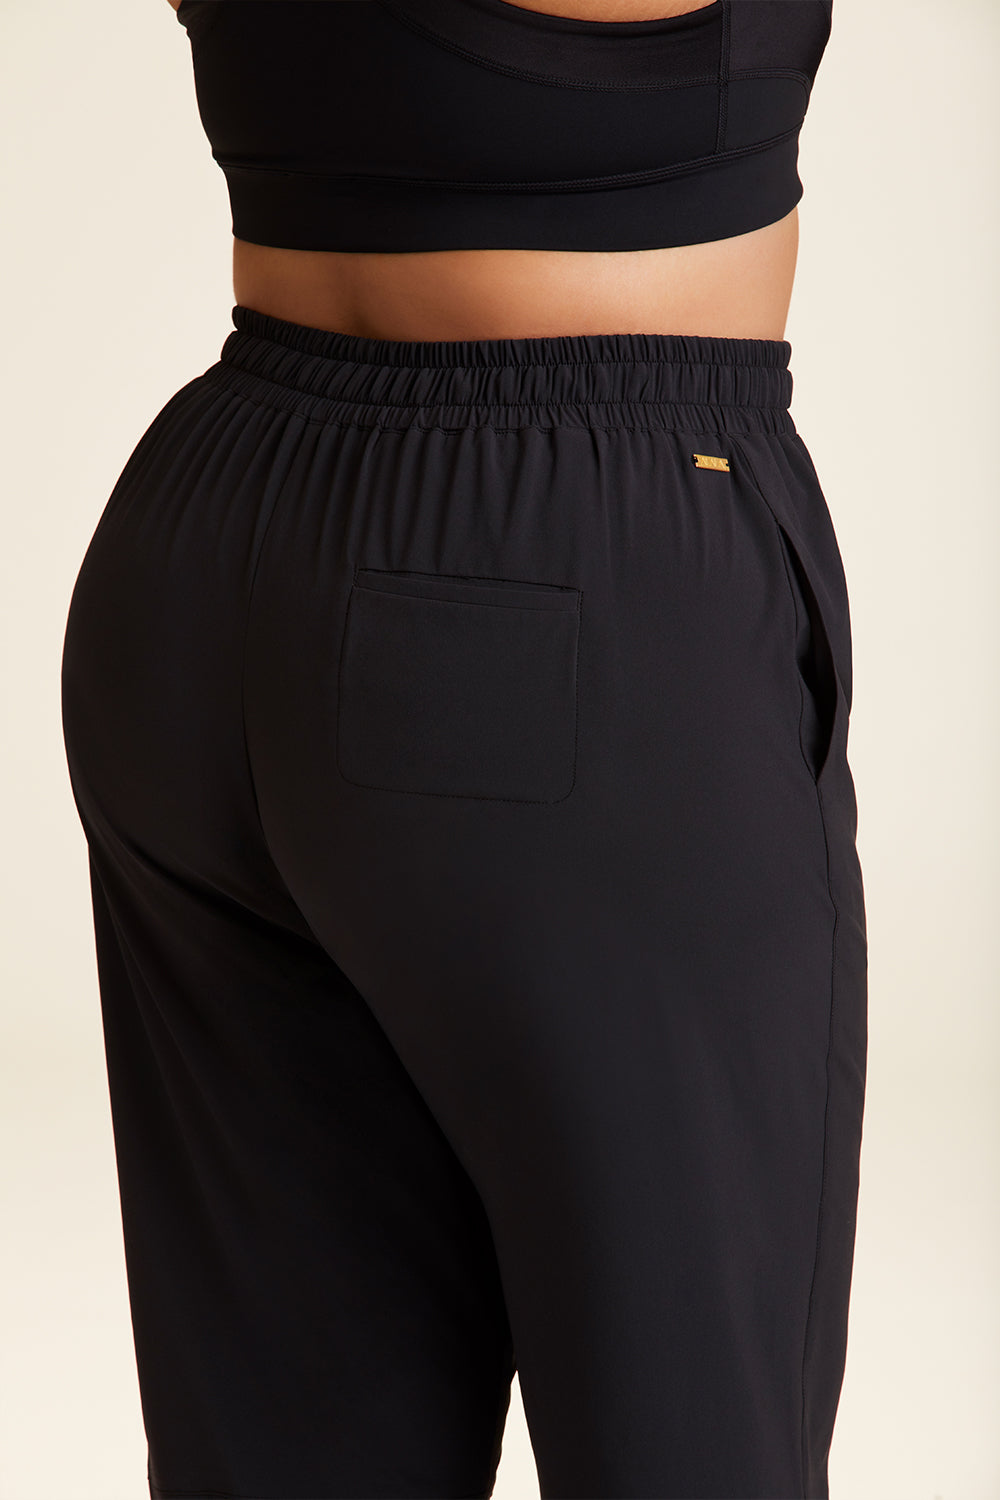 Women's Lululemon Black Pants Drawstring Size 4 Pockets